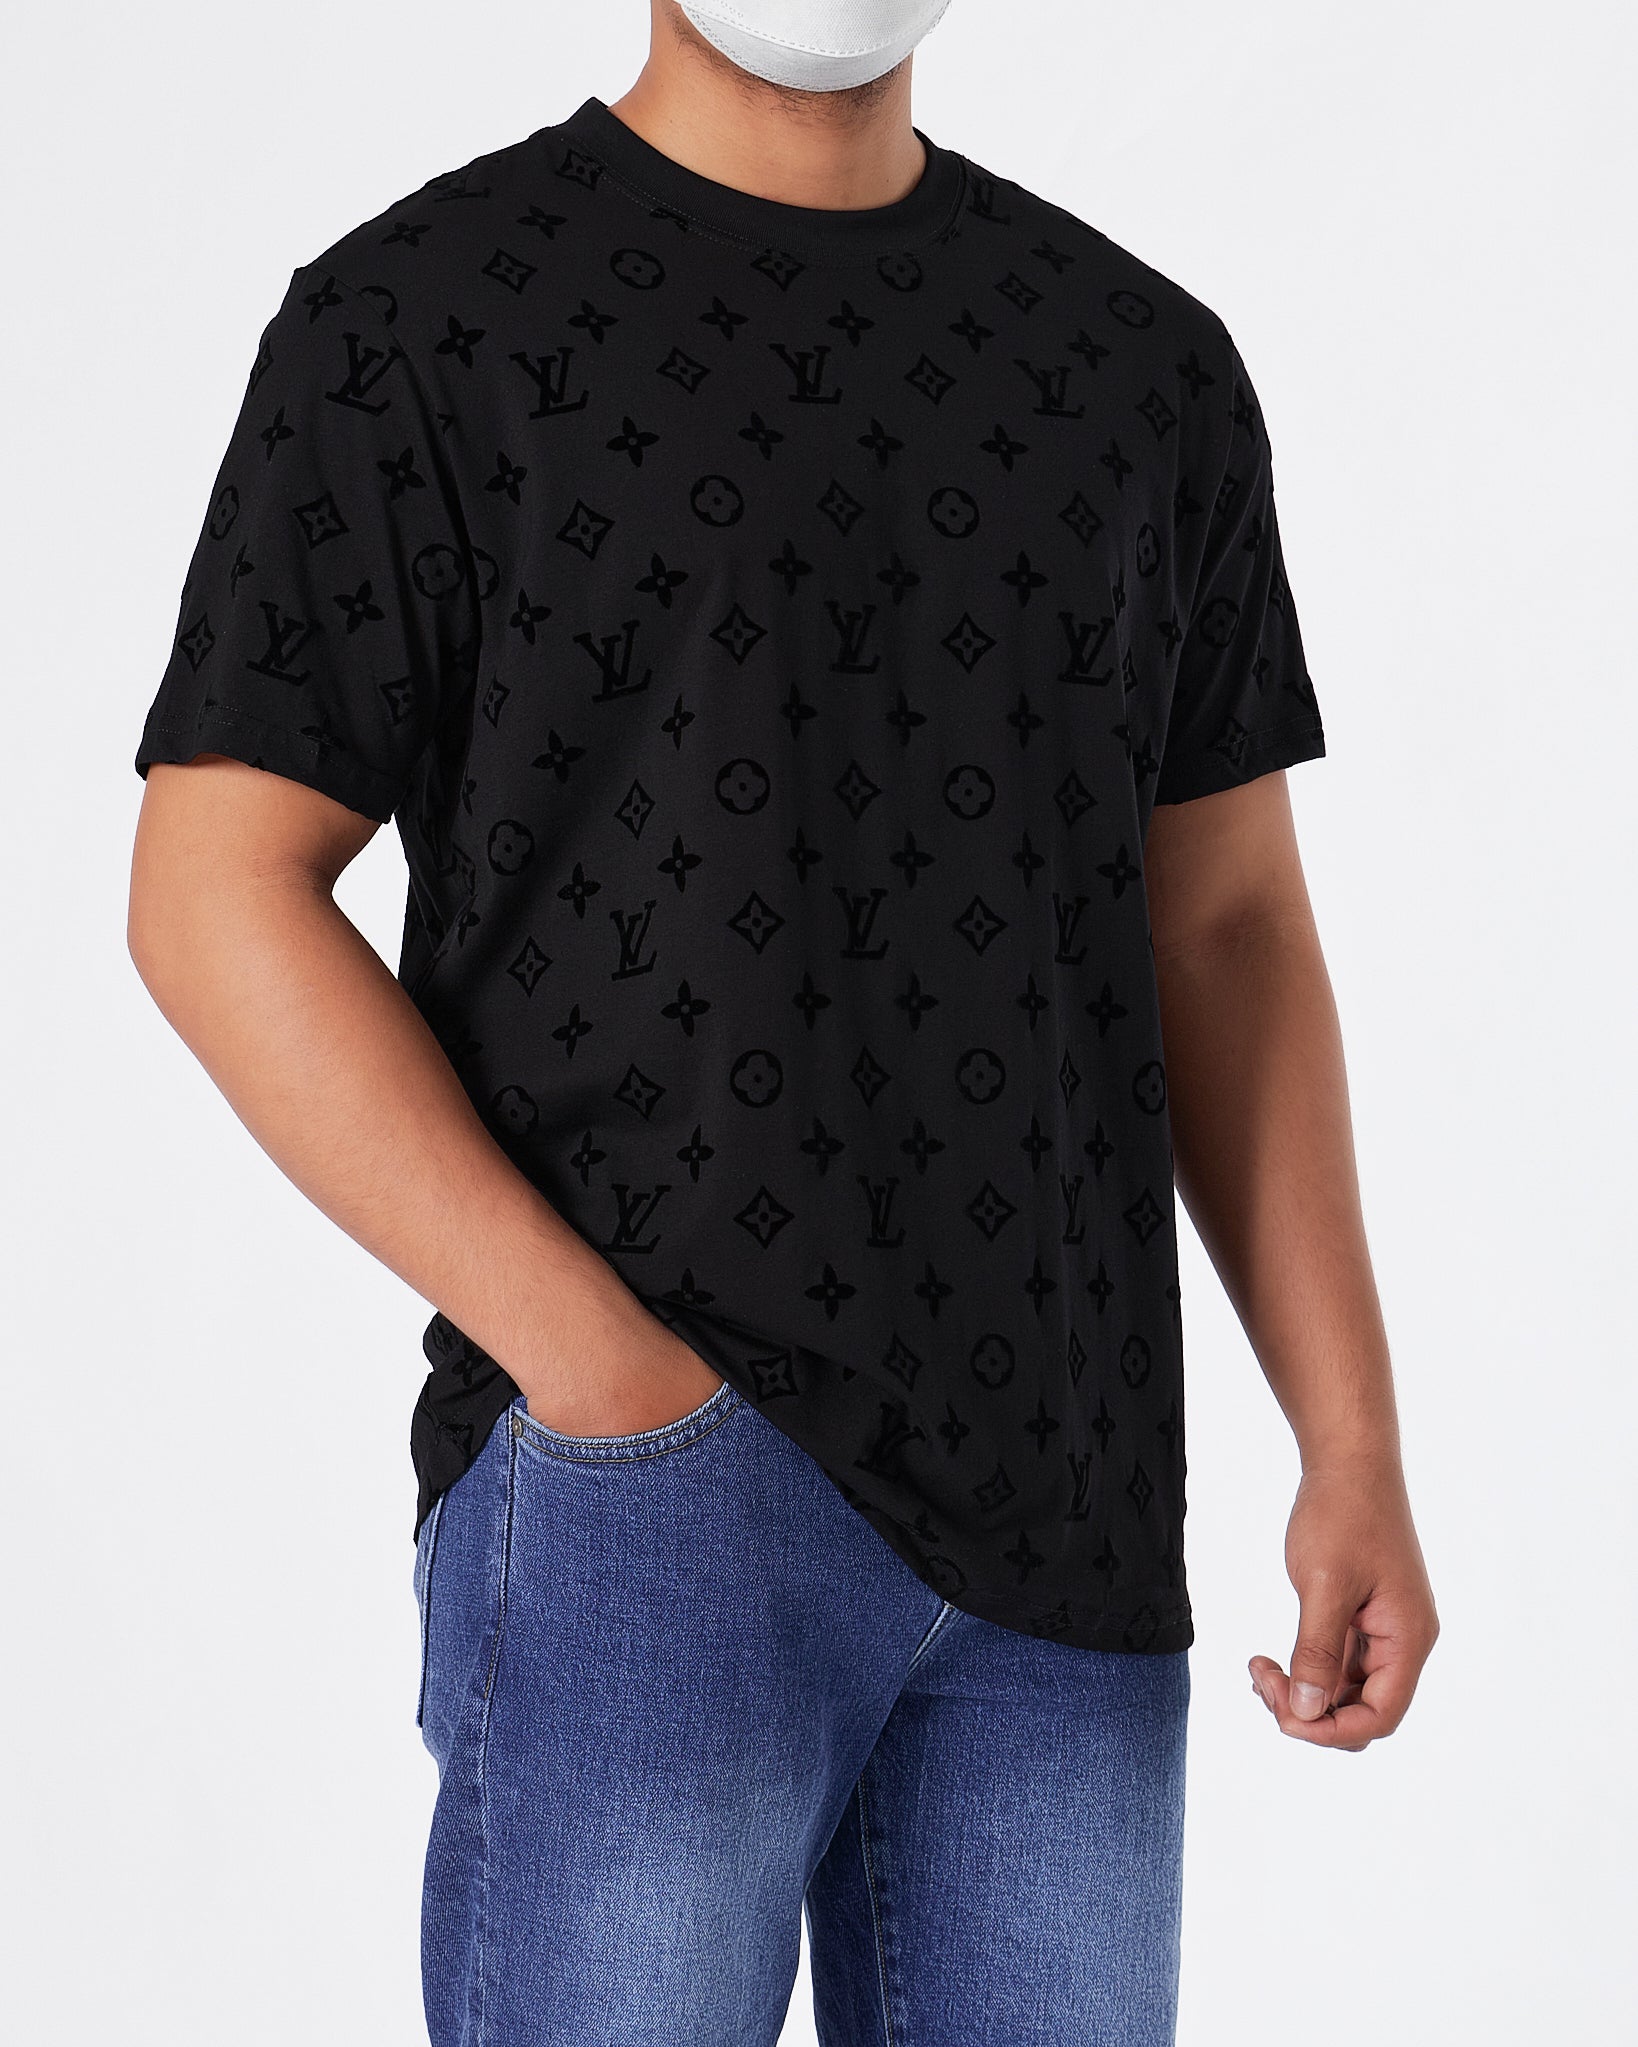 LV Monogram Embossed Over Printed Men Black T-Shirt 22.90